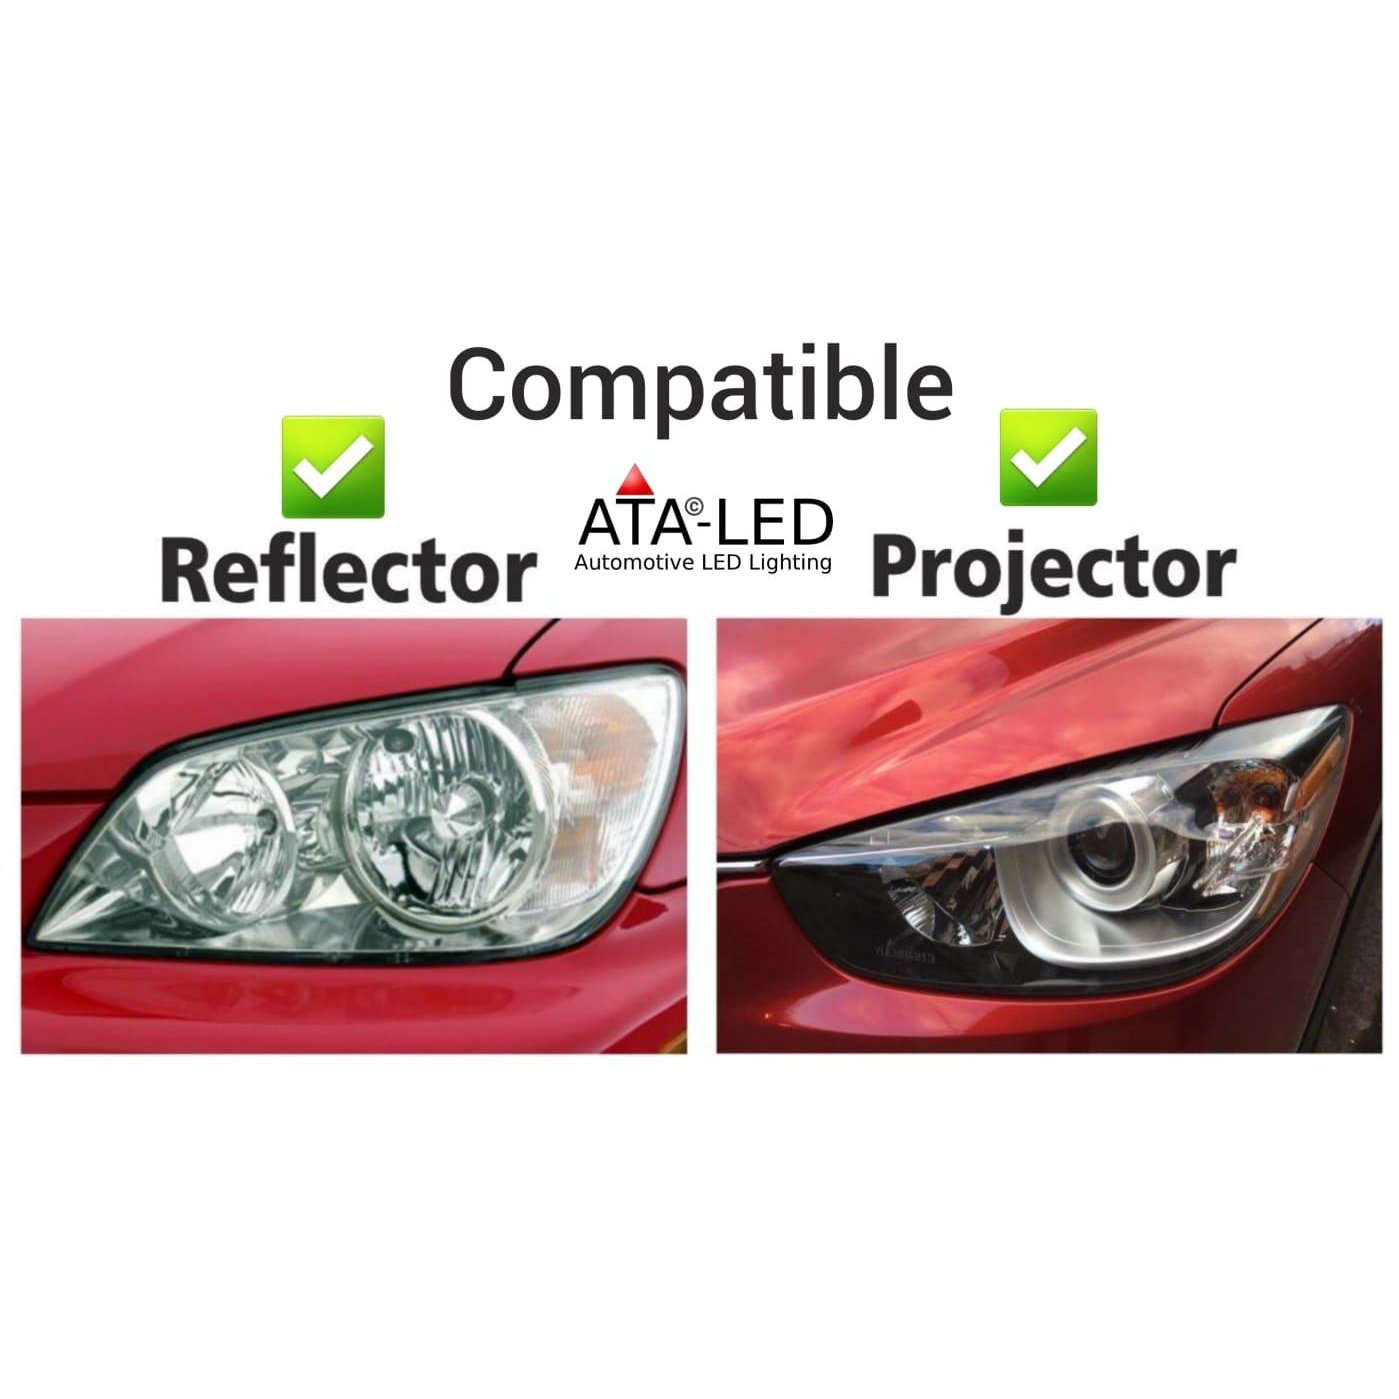 reflector and projector headlights